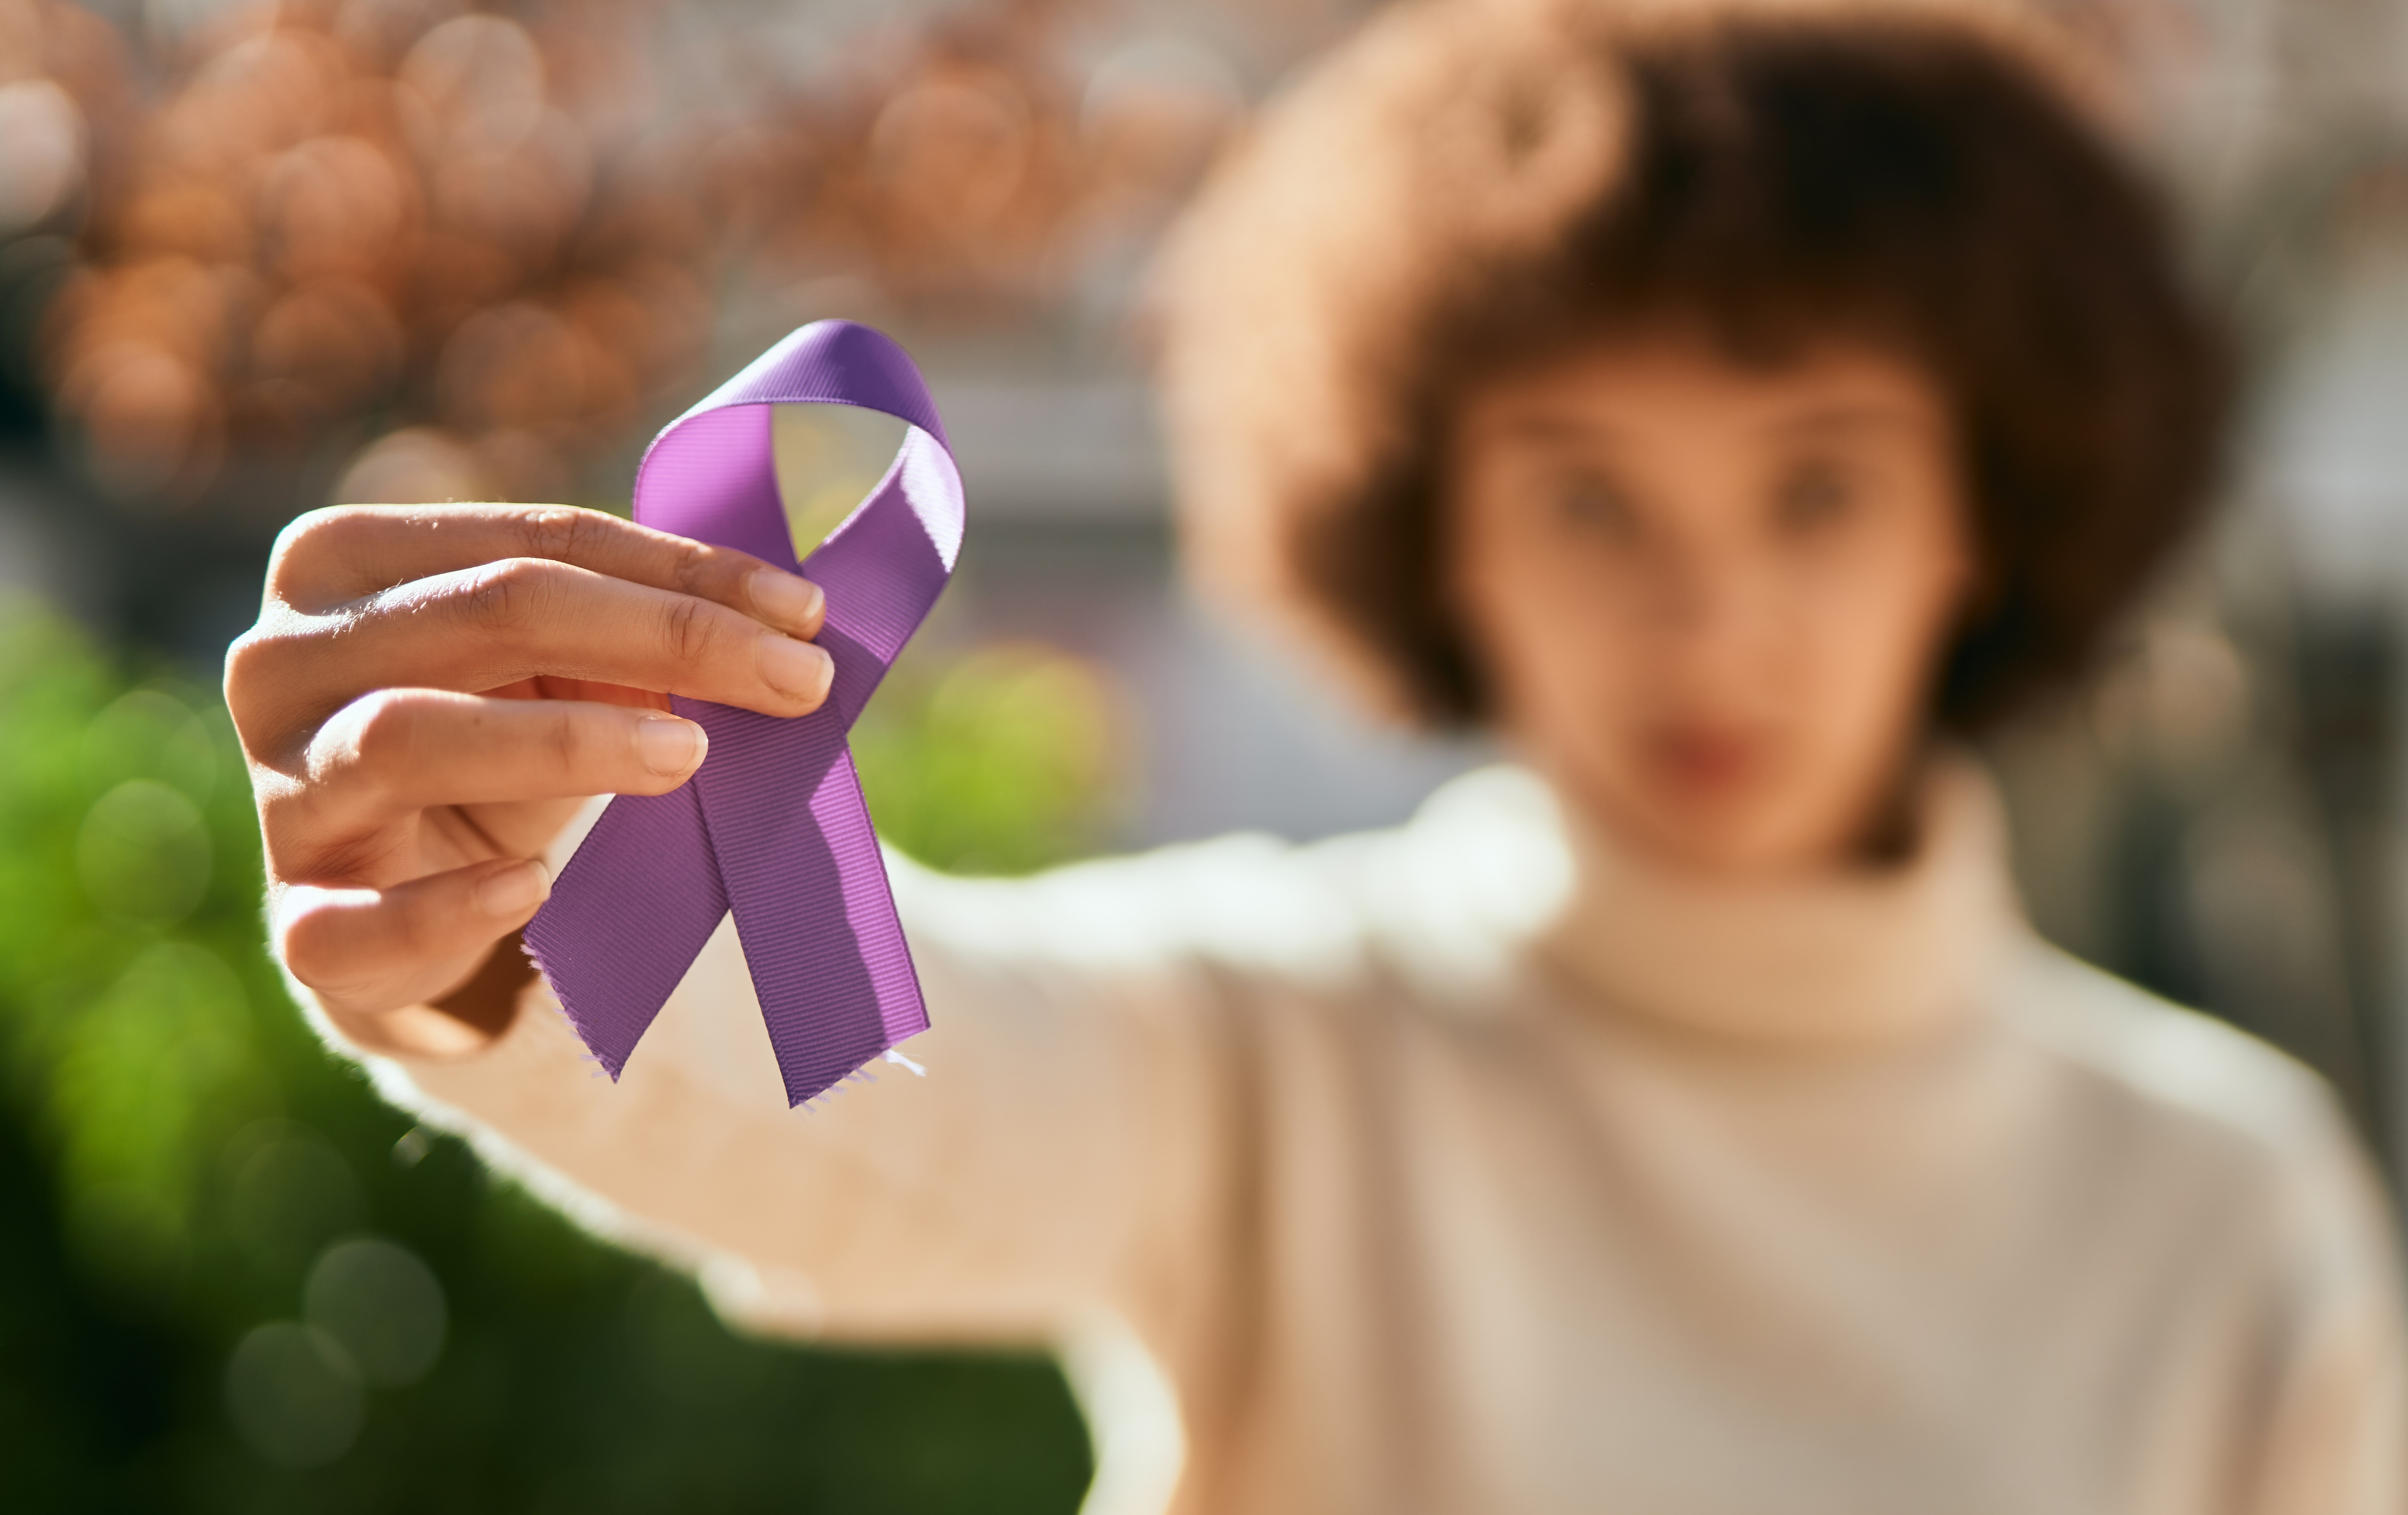 Woman holding purple domestic violence awareness ribbon.